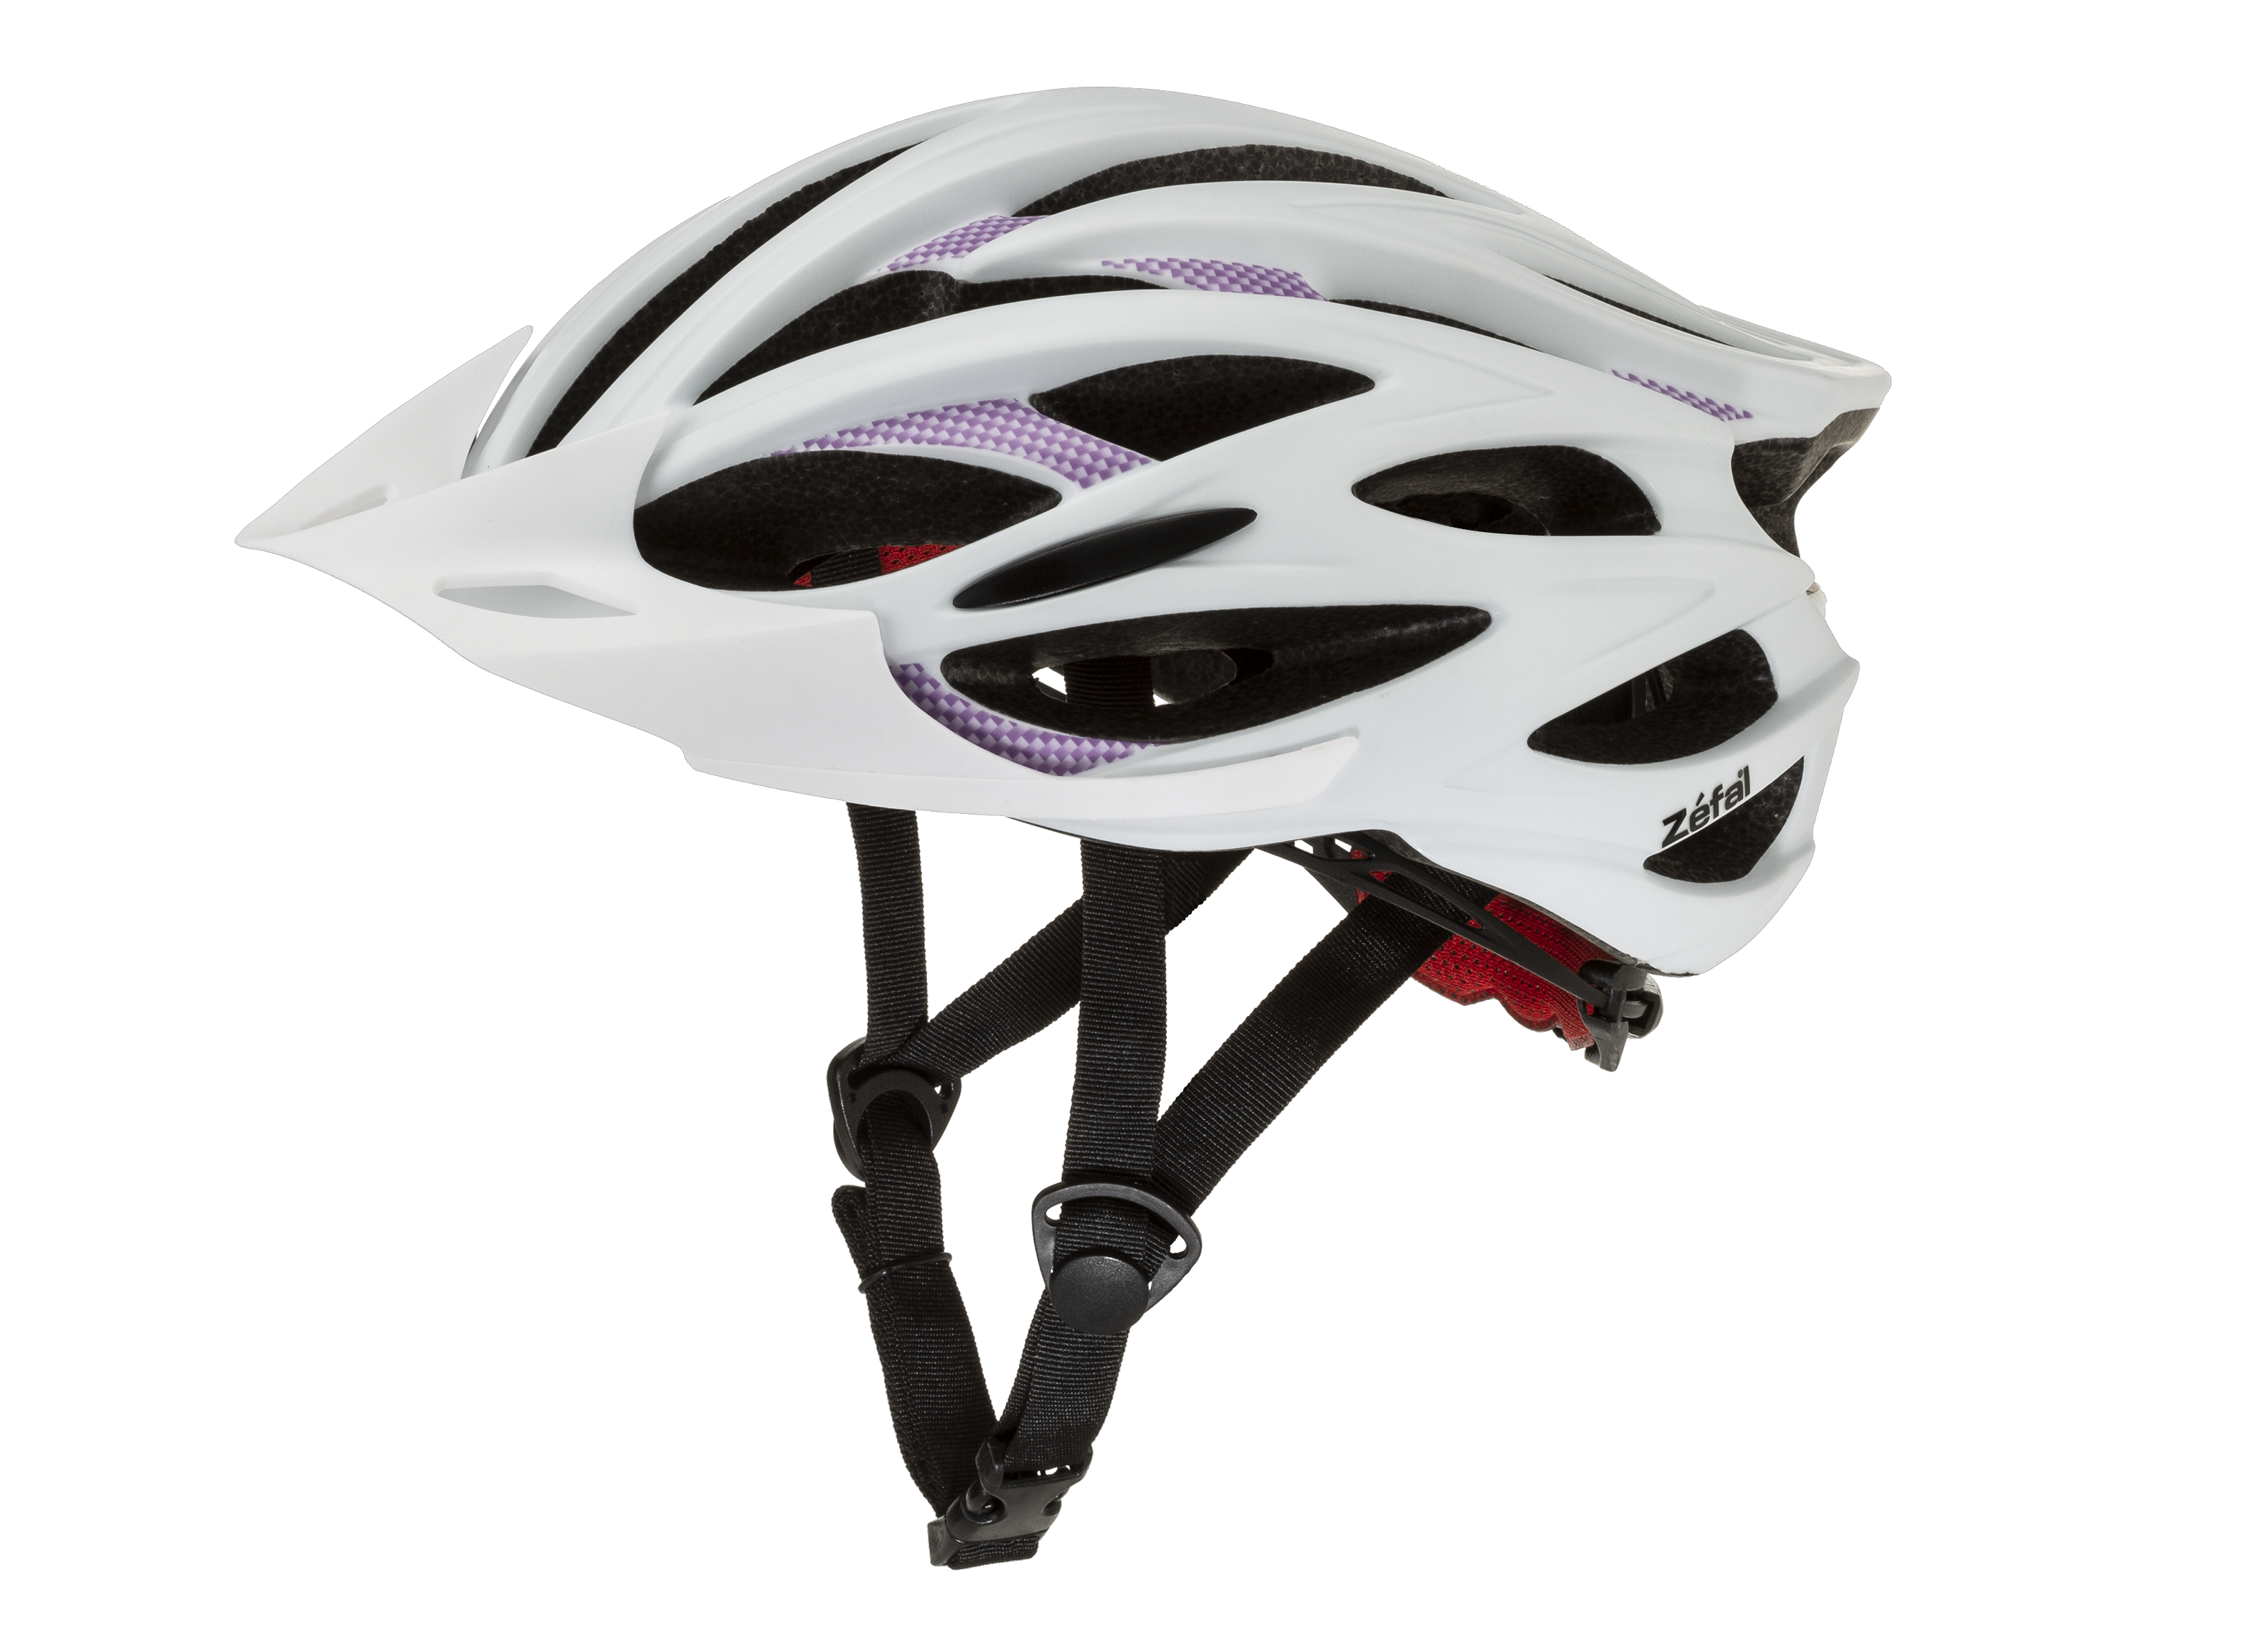 St De vreemdeling mooi Zefal Pro 24 Bike Helmet - Consumer Reports